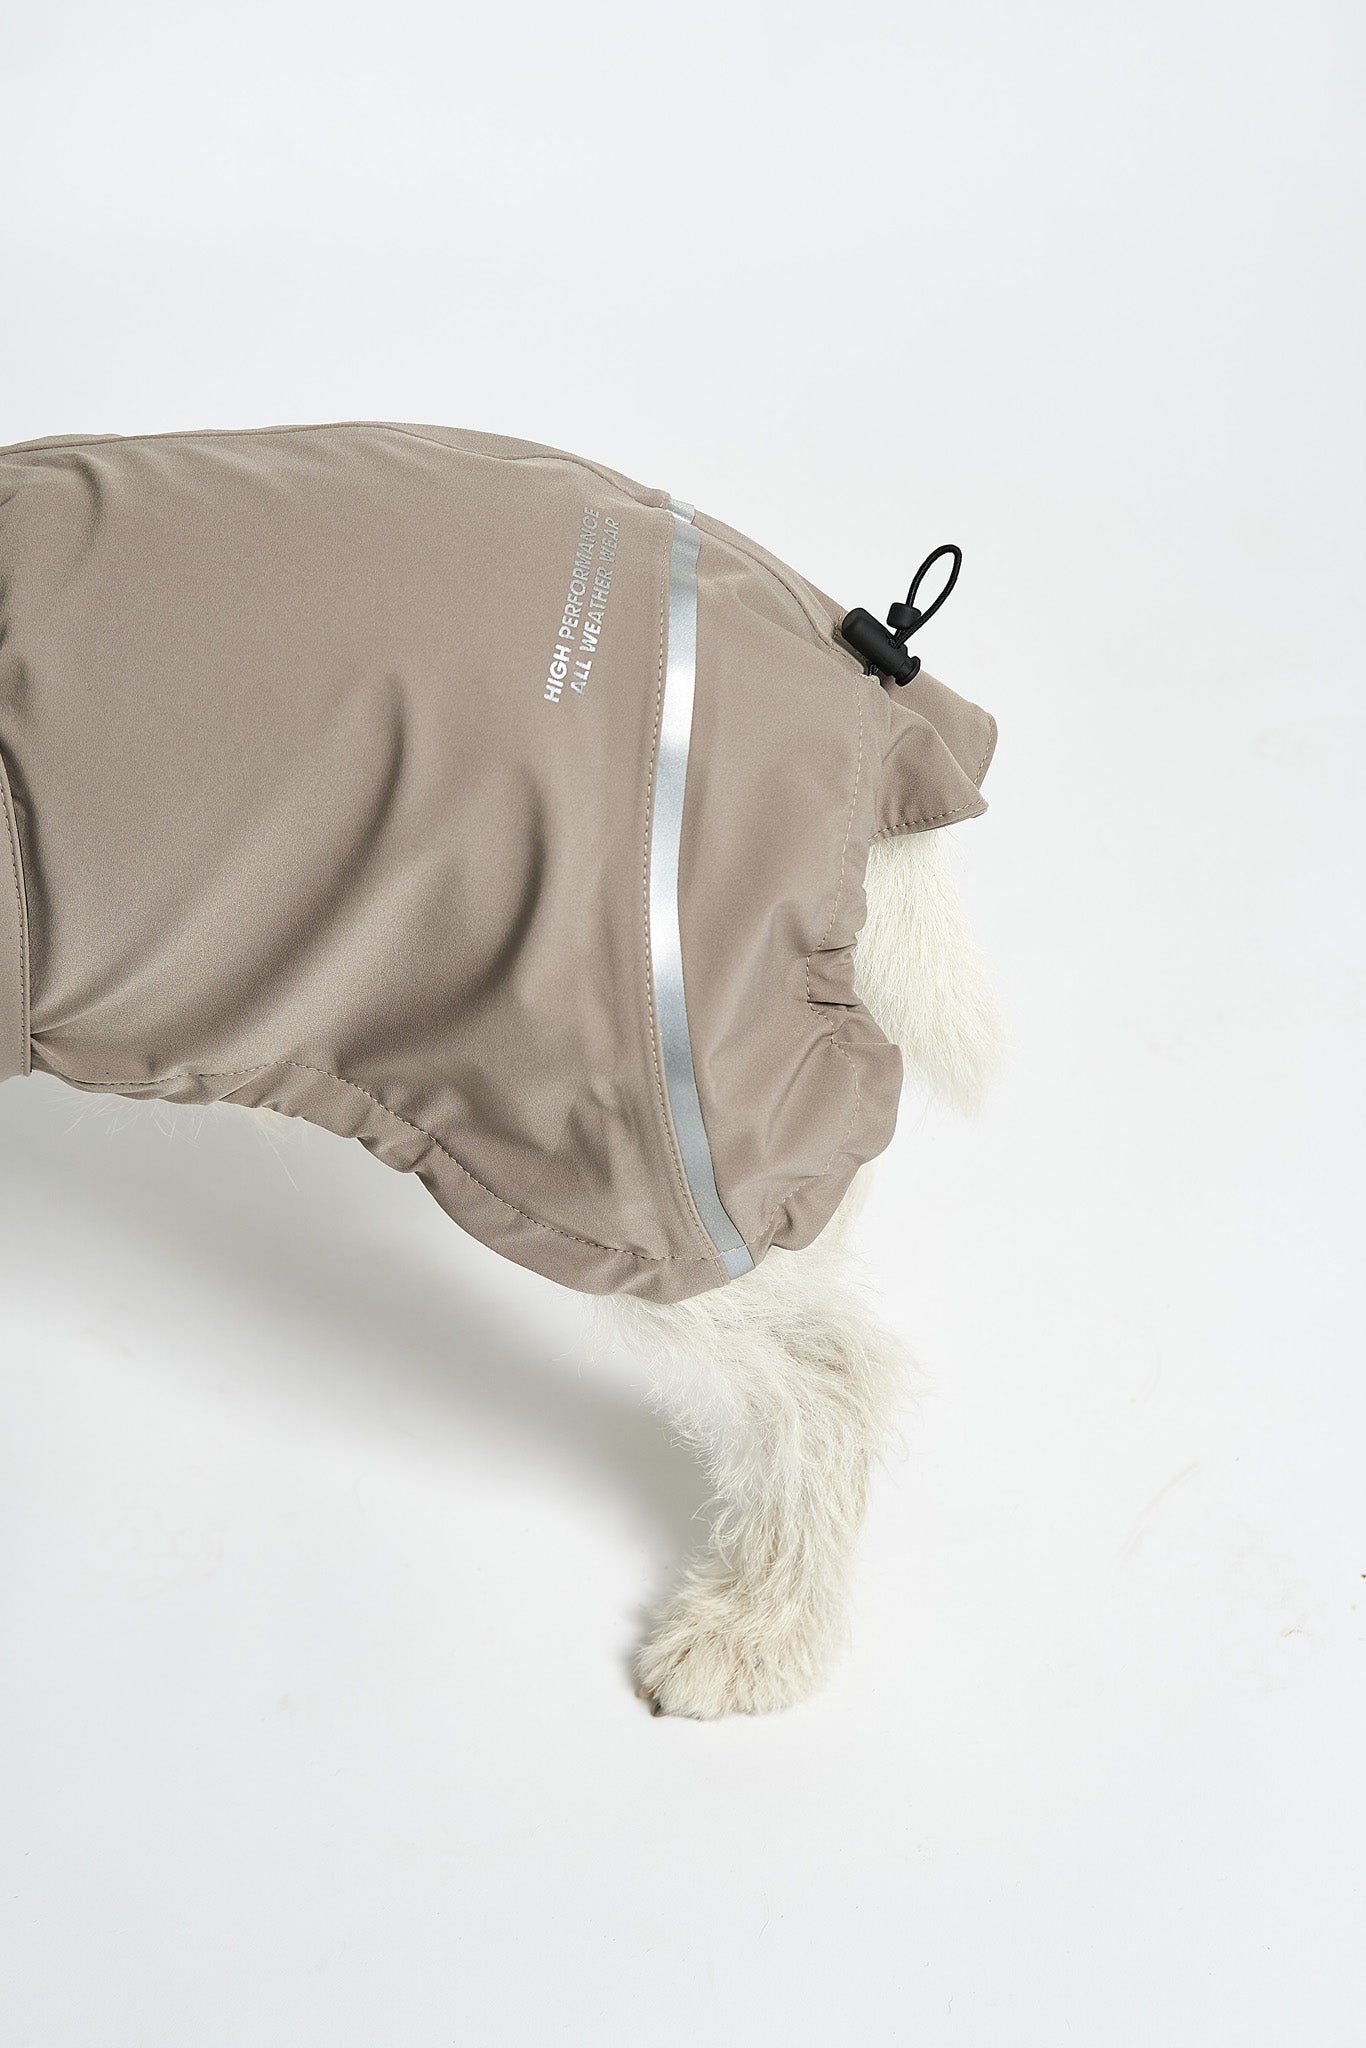 Valentina Dog Rain Coat Keep your furry friend dry